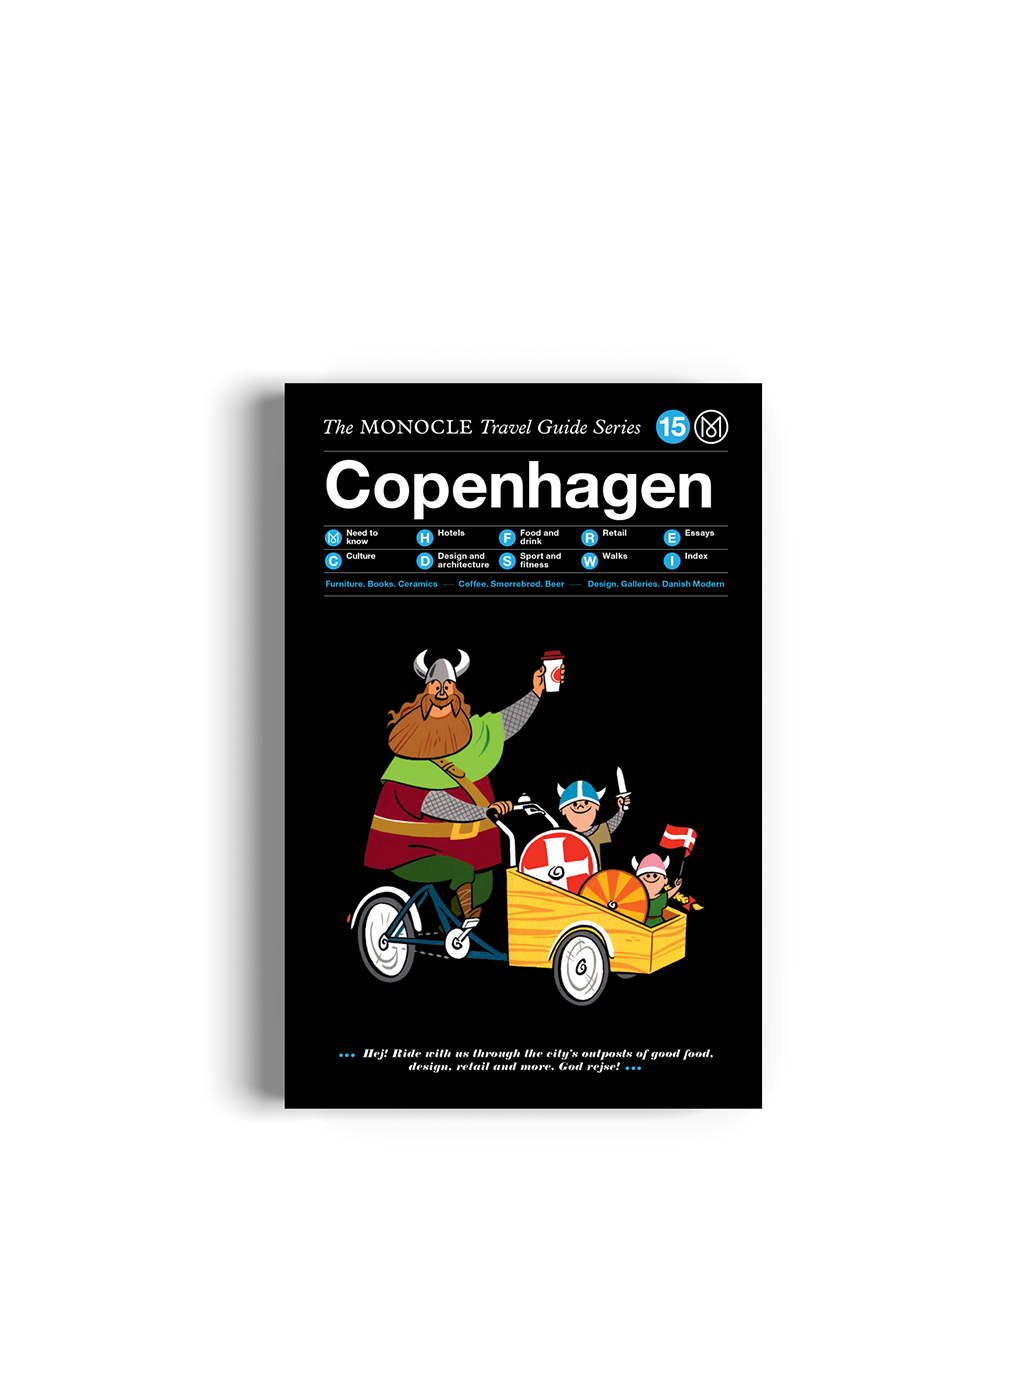 COPENHAGEN: THE MONOCLE TRAVEL GUIDE SERIES